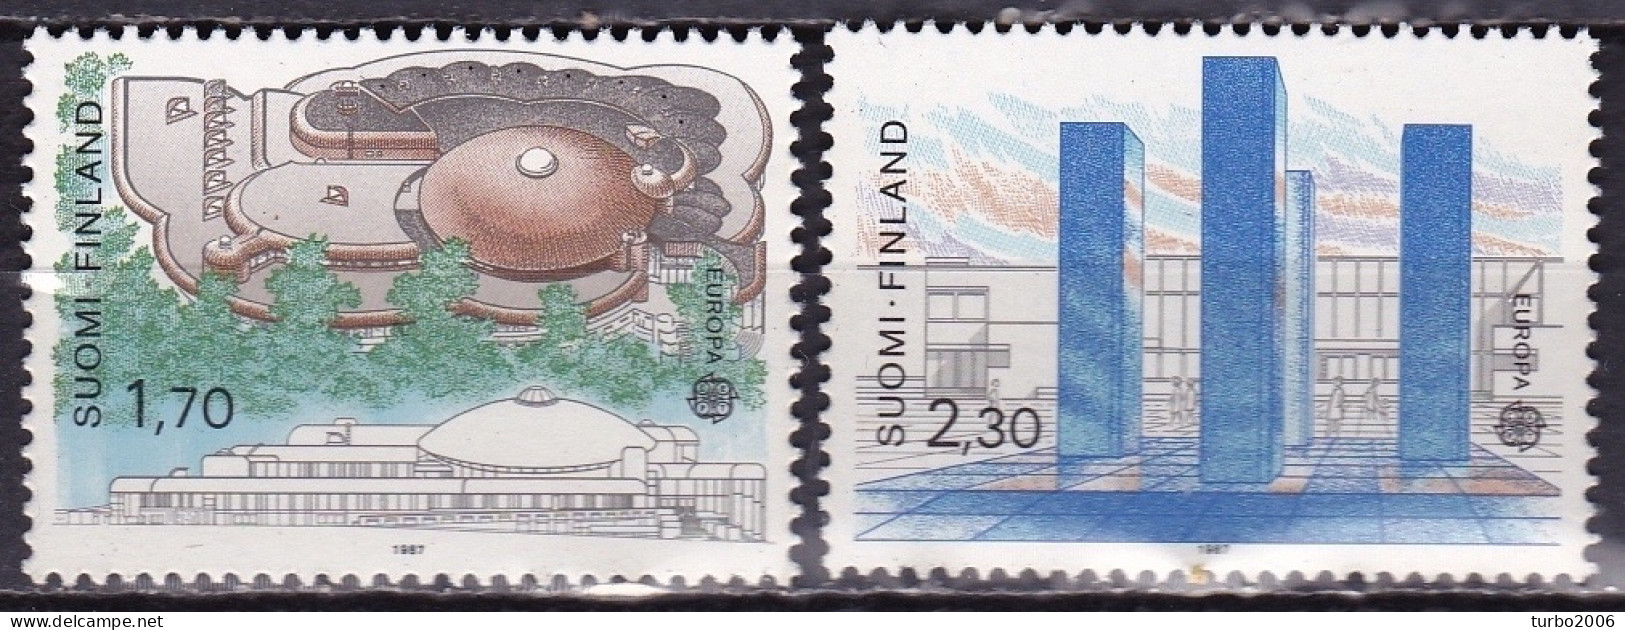 Finland 1987 Europe CEPT Modern Architecture MNH Set Michel 1021 / 1022 - Unused Stamps